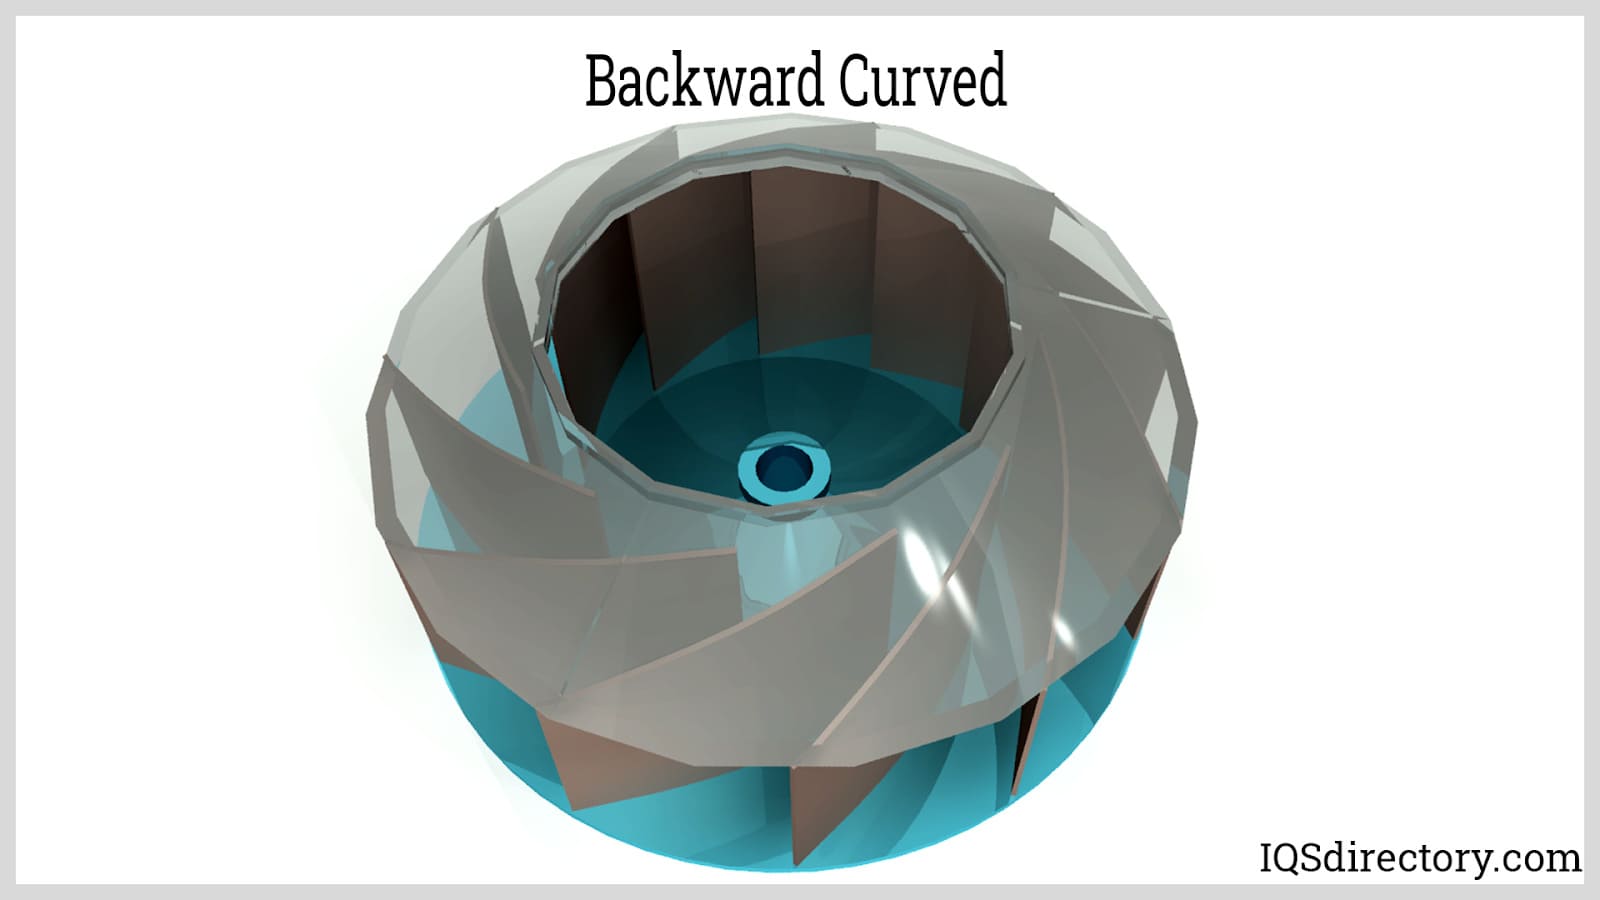 Backward Curved